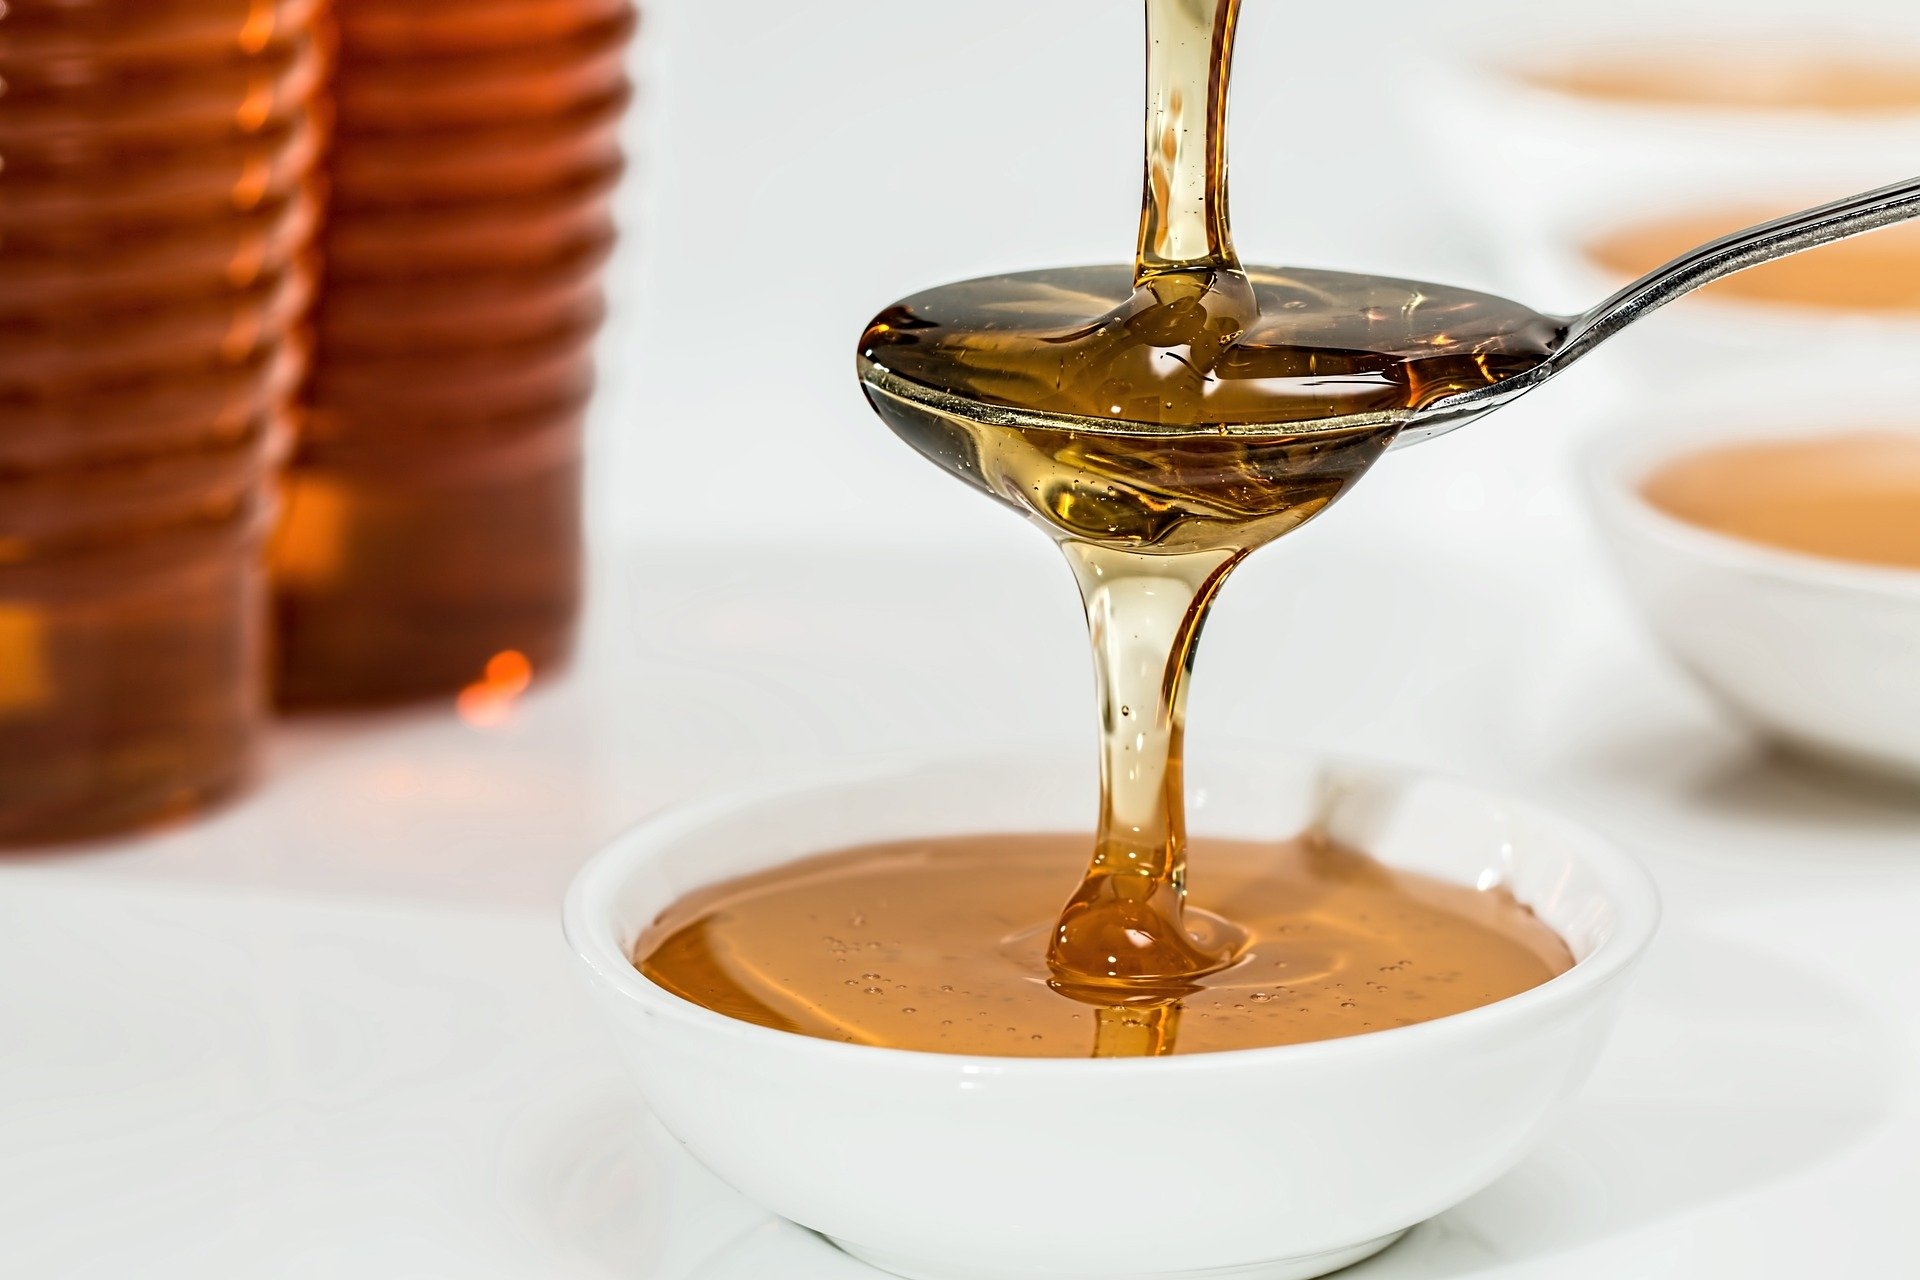 Miels aphrodisiaques : faux produits naturels, vrai risque d’effets secondaires